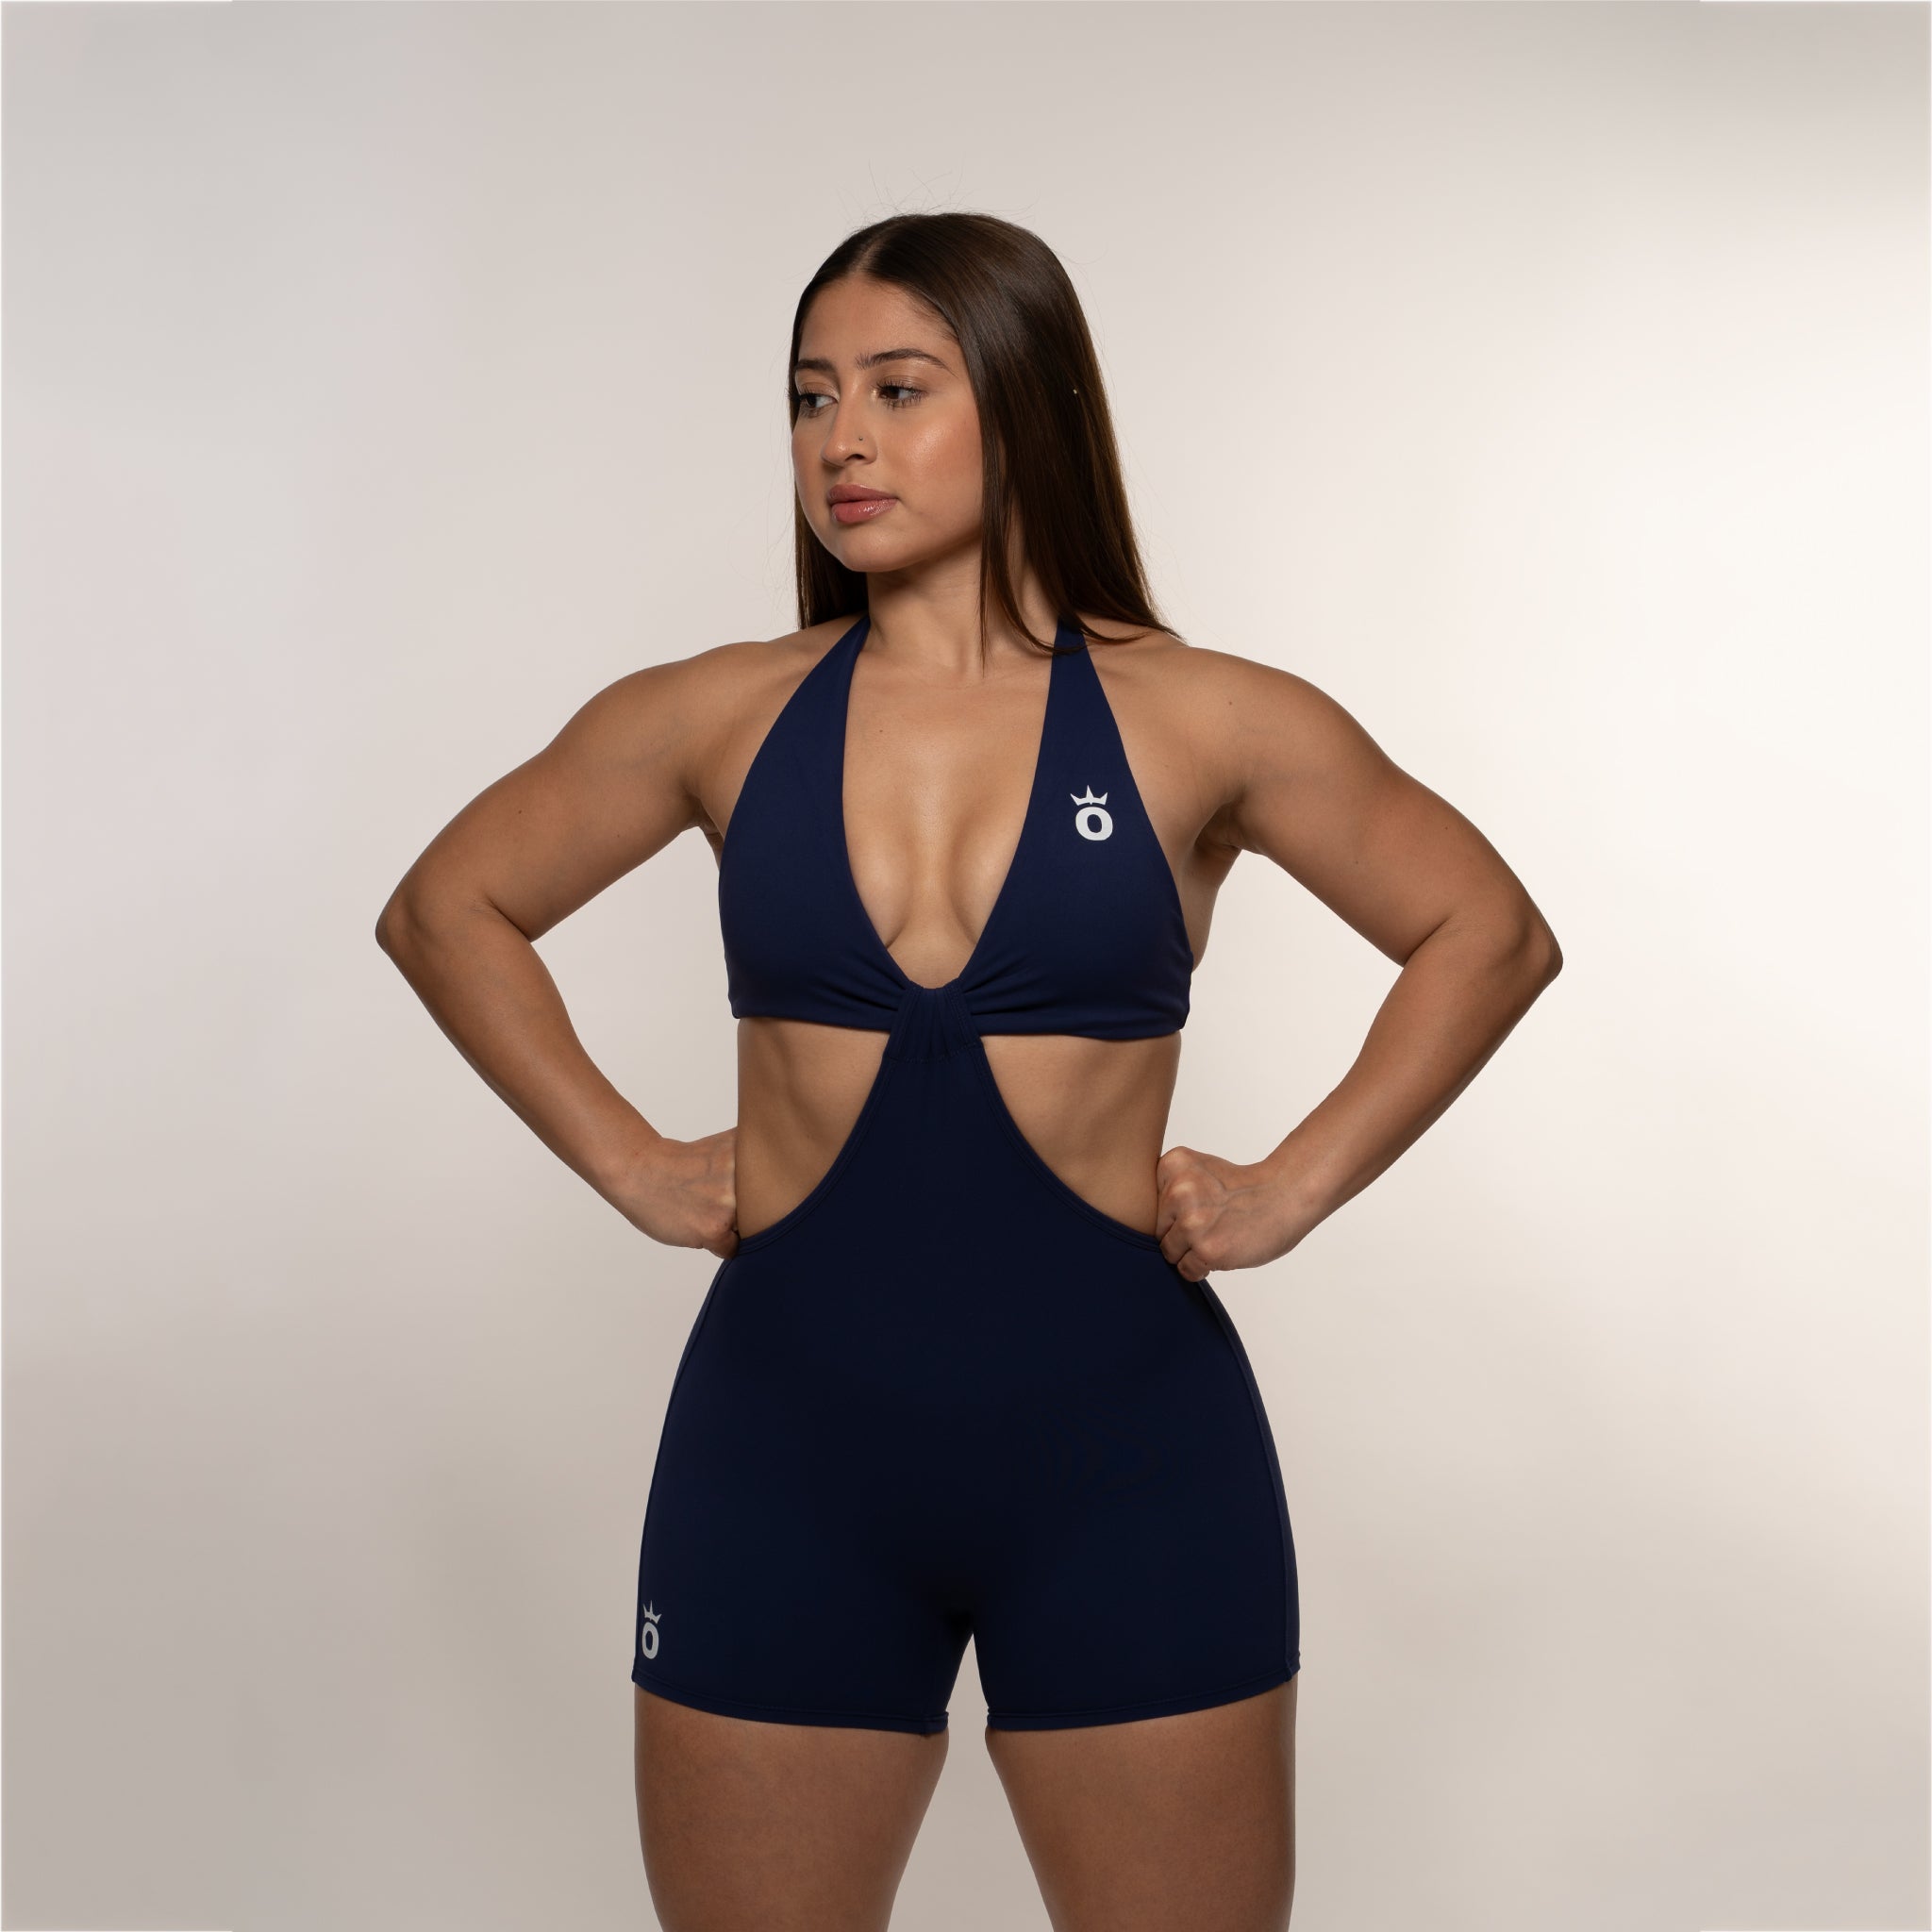 Crush Bodysuit Shorts in Navy Blue: Women's Activewear Essential – OLOORÌ  ATHLETICS